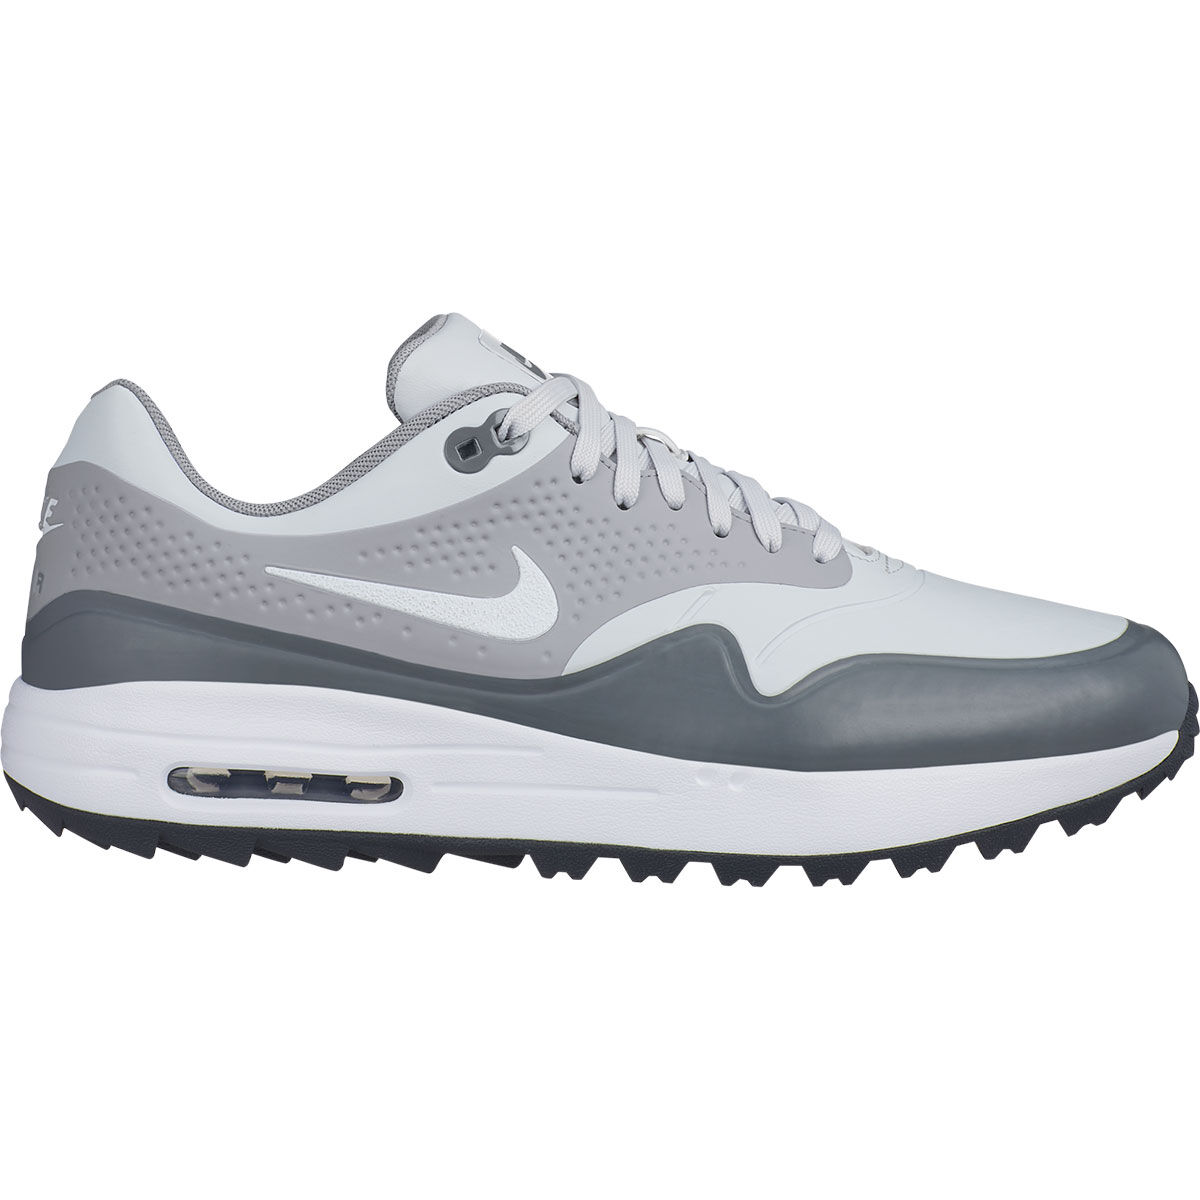 nike air max 1g golf shoes grey